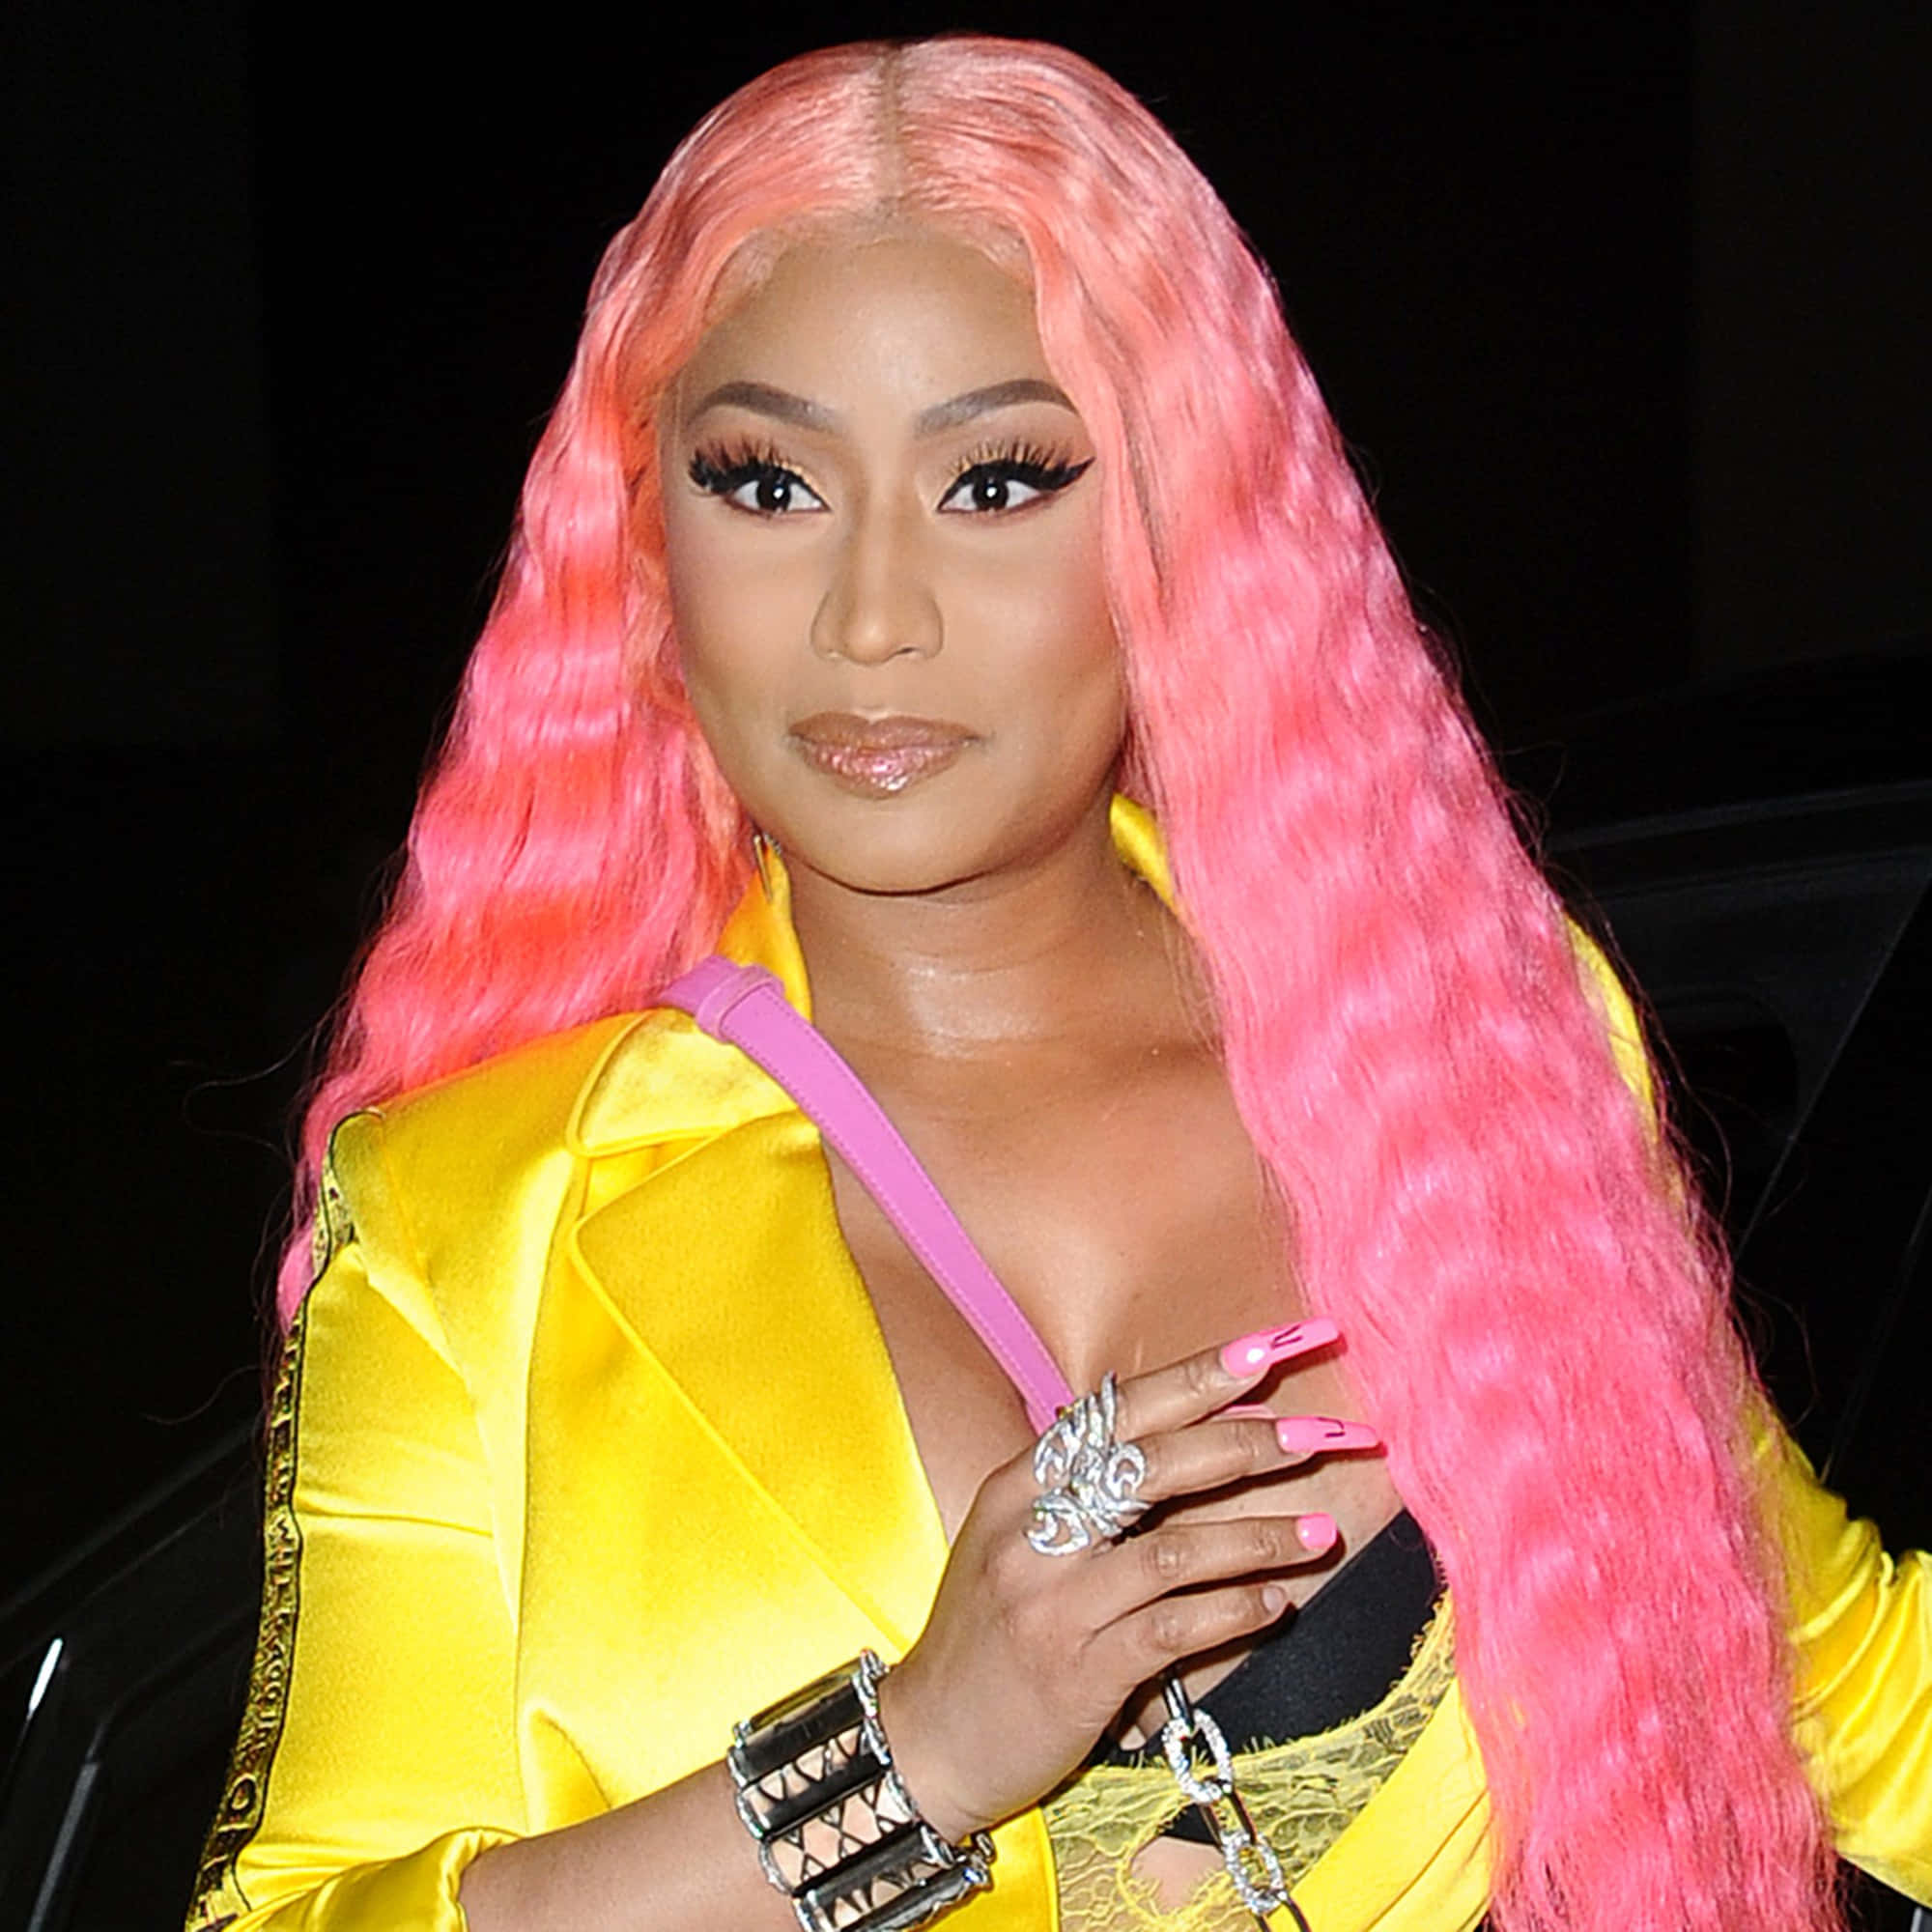 Nicki Minaj Brings Her A-Game to the Red Carpet